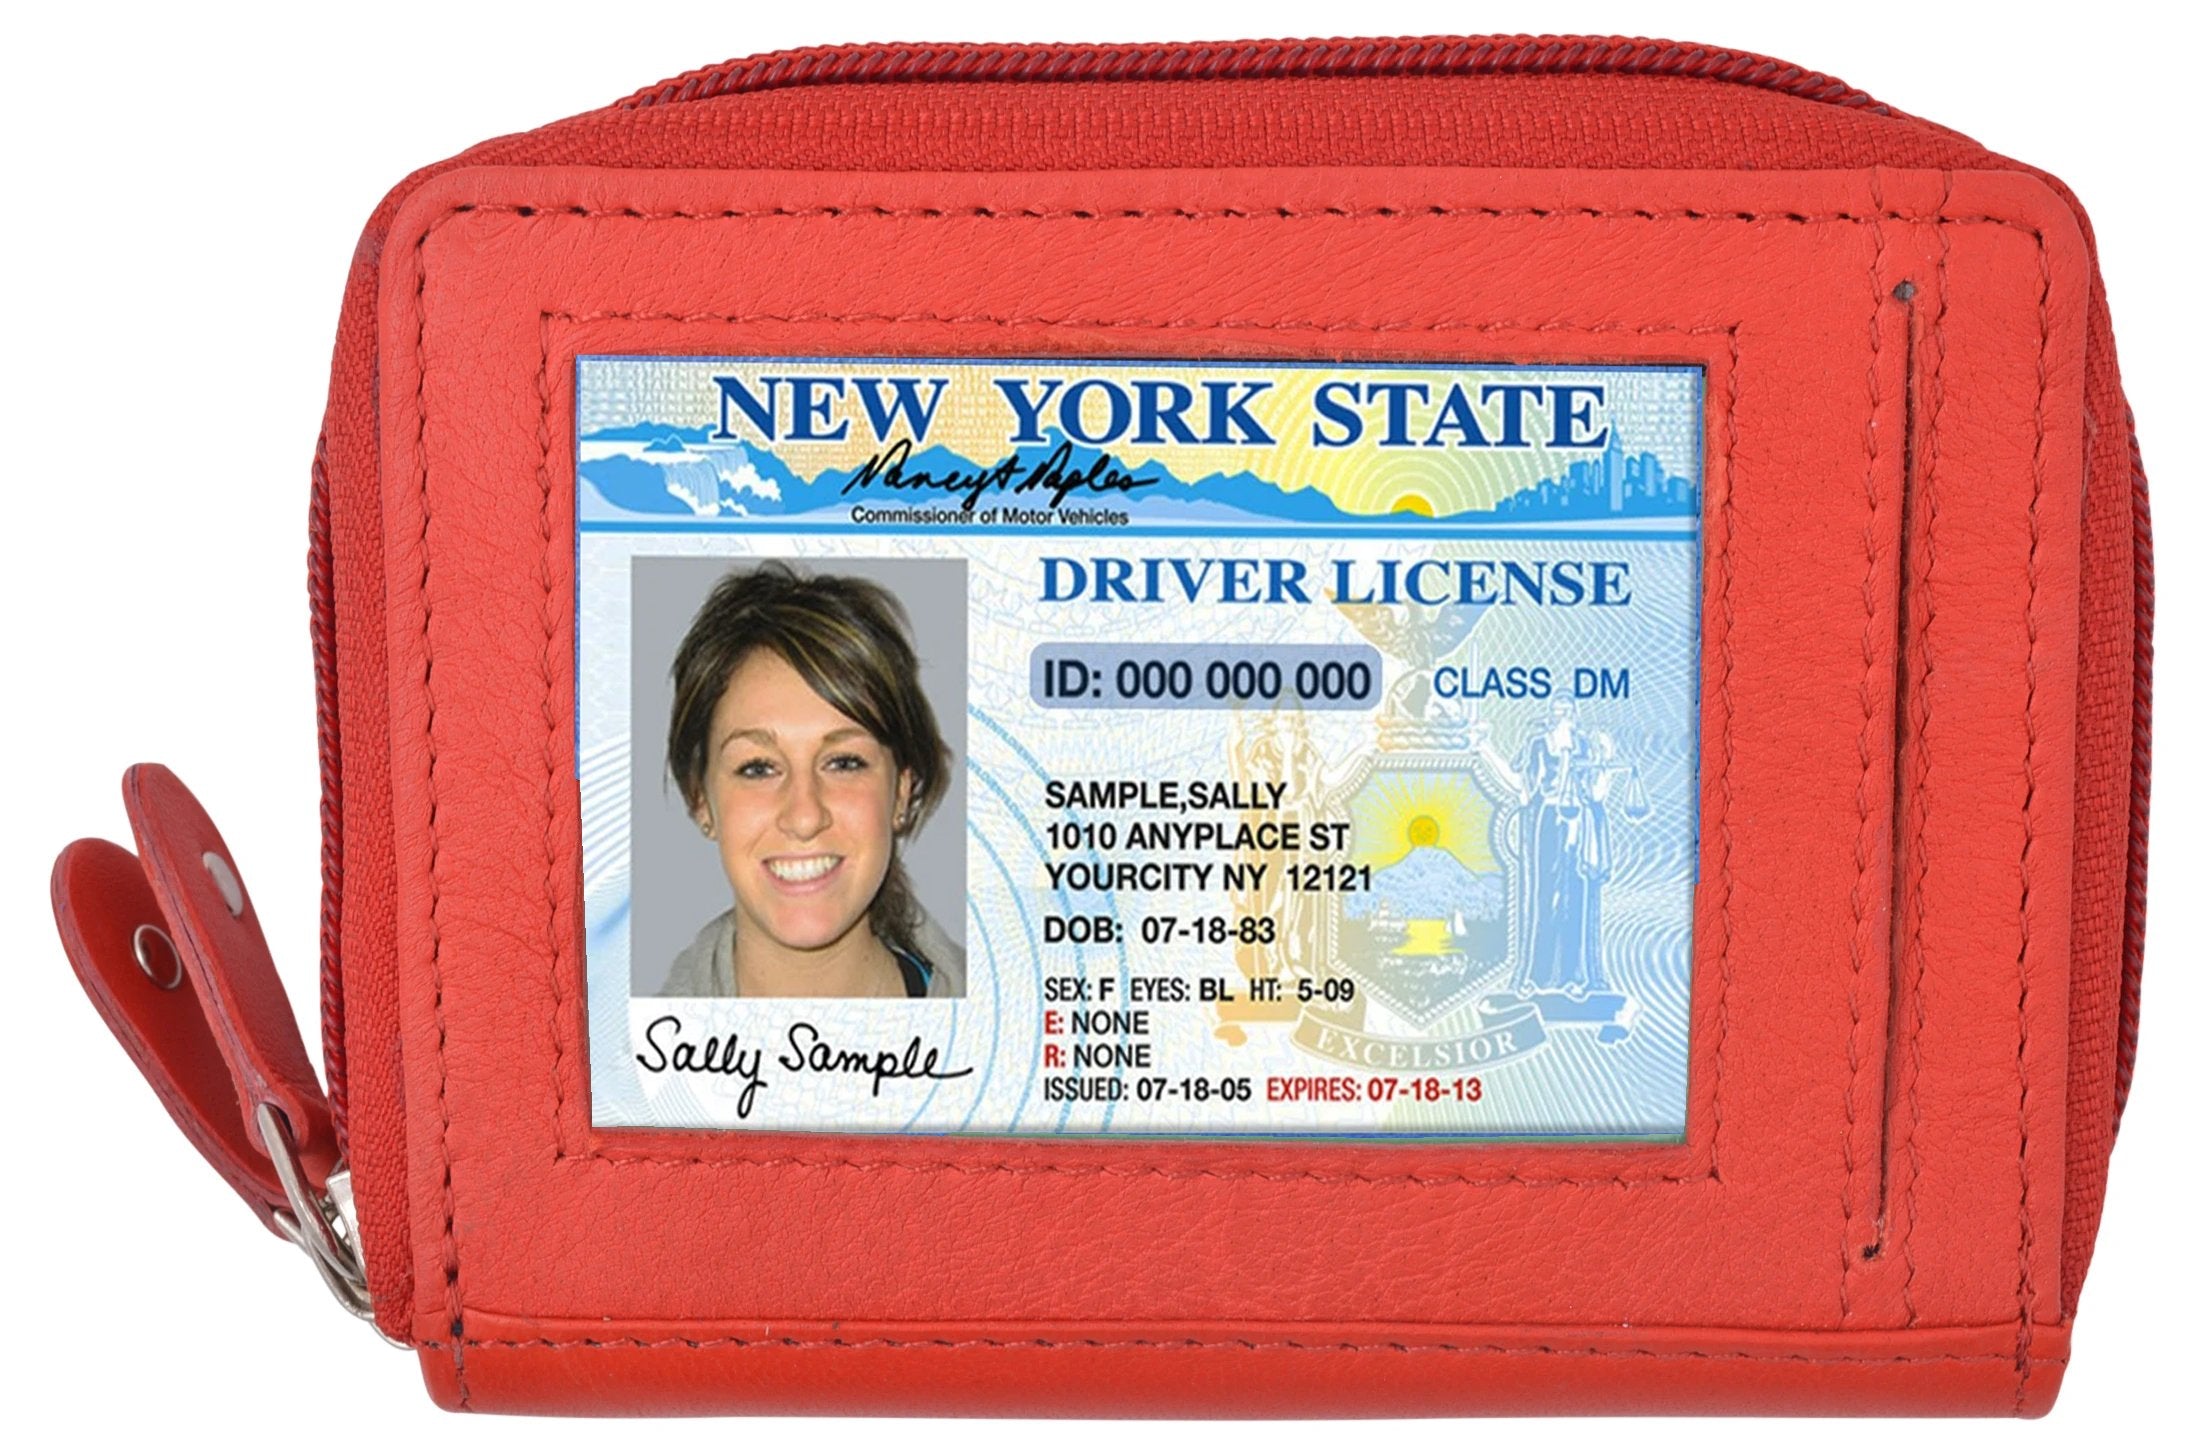 AFONiE- Leather Secure Cards Holder Wallet